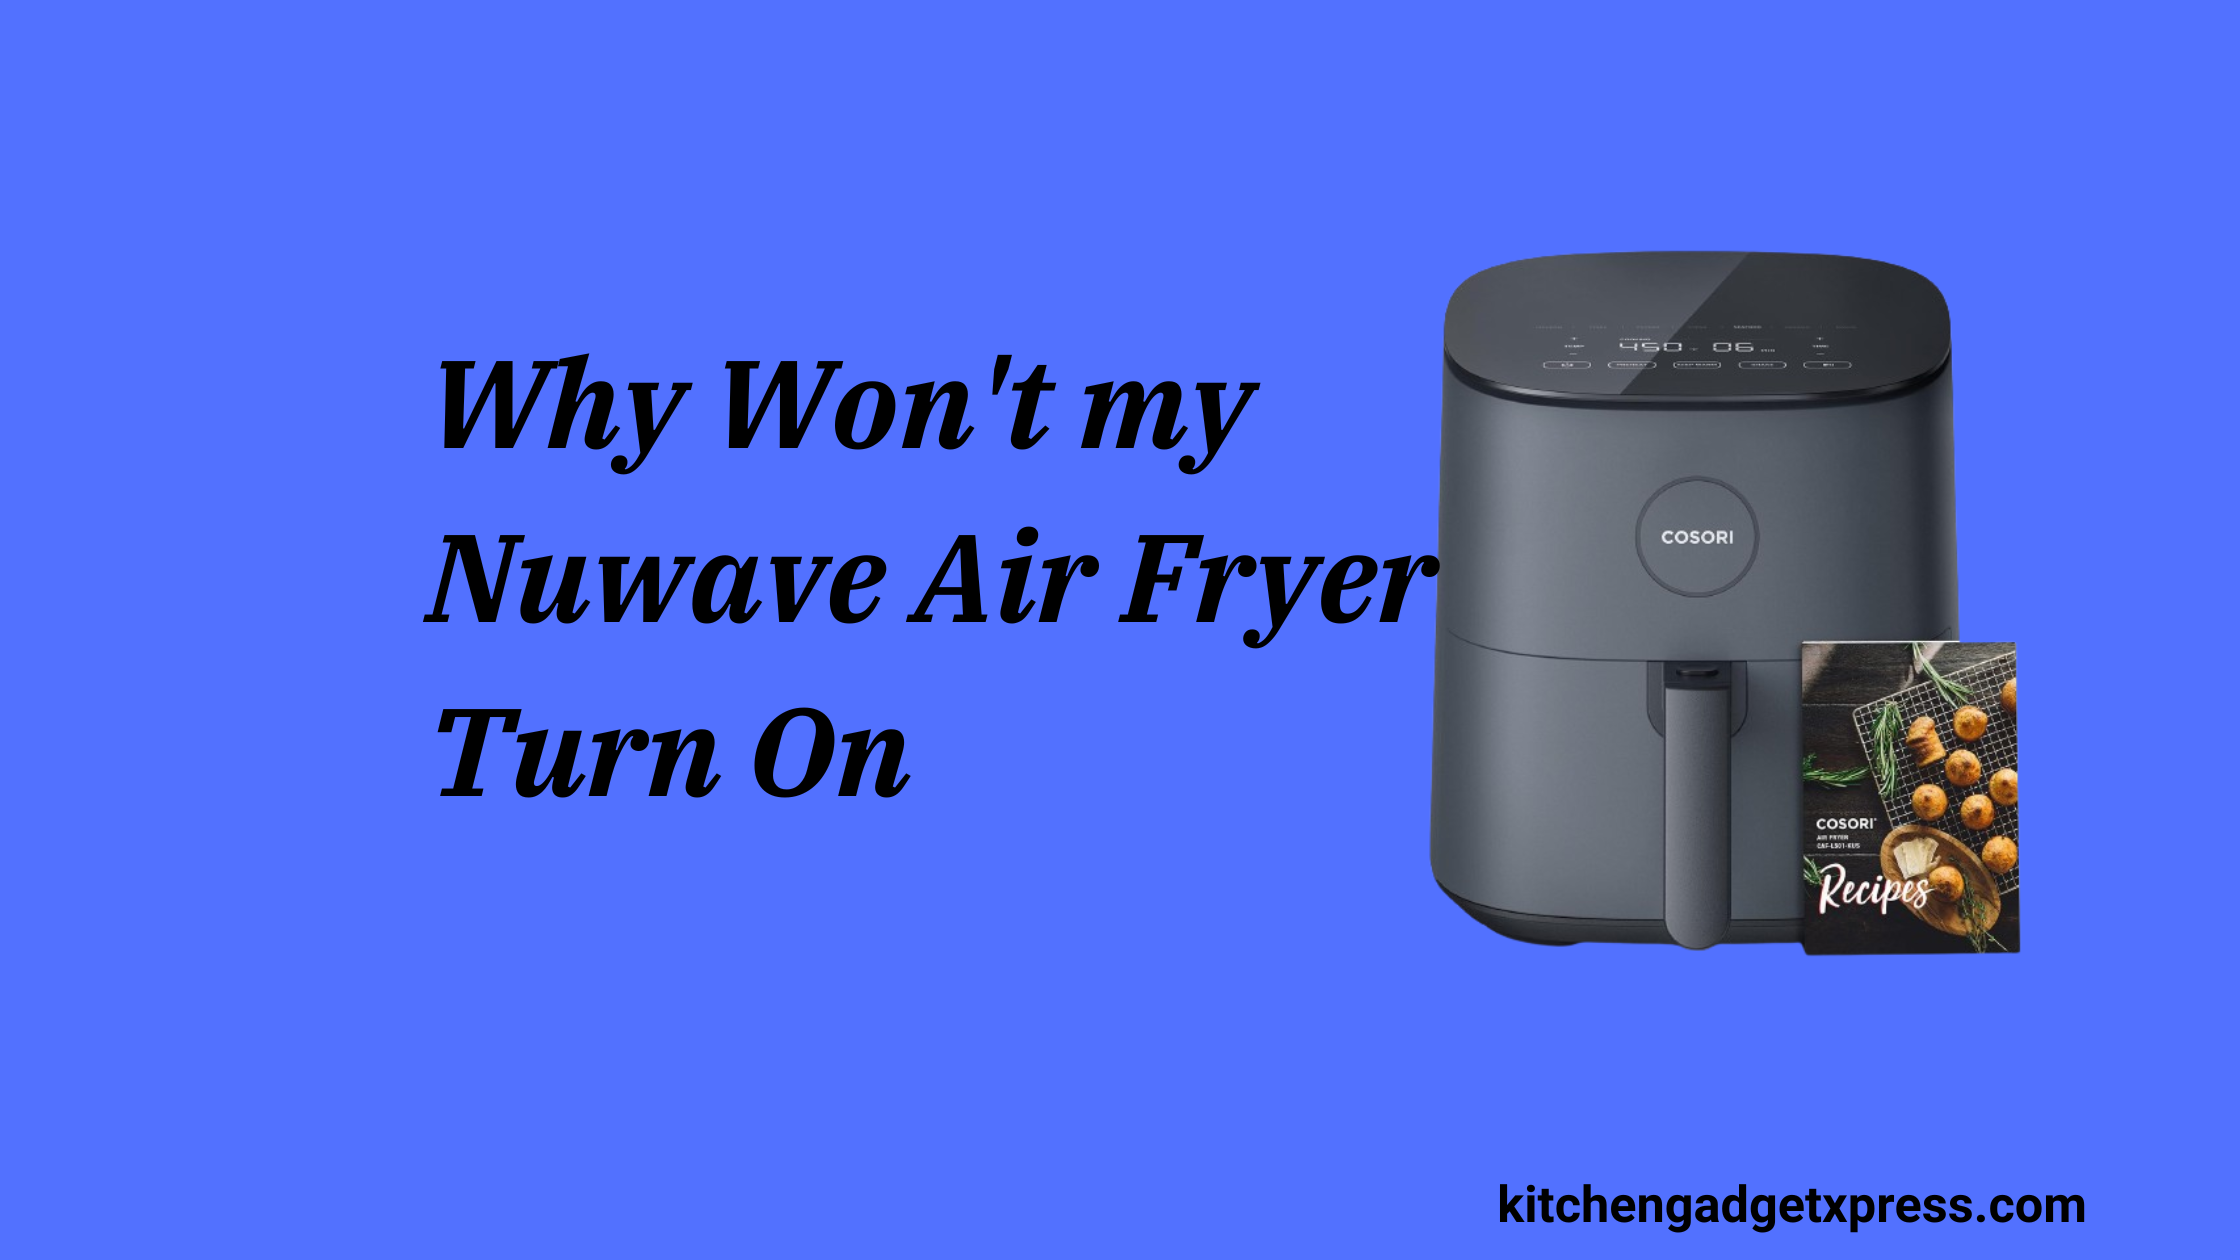 Why Won't my Nuwave Air Fryer Turn On